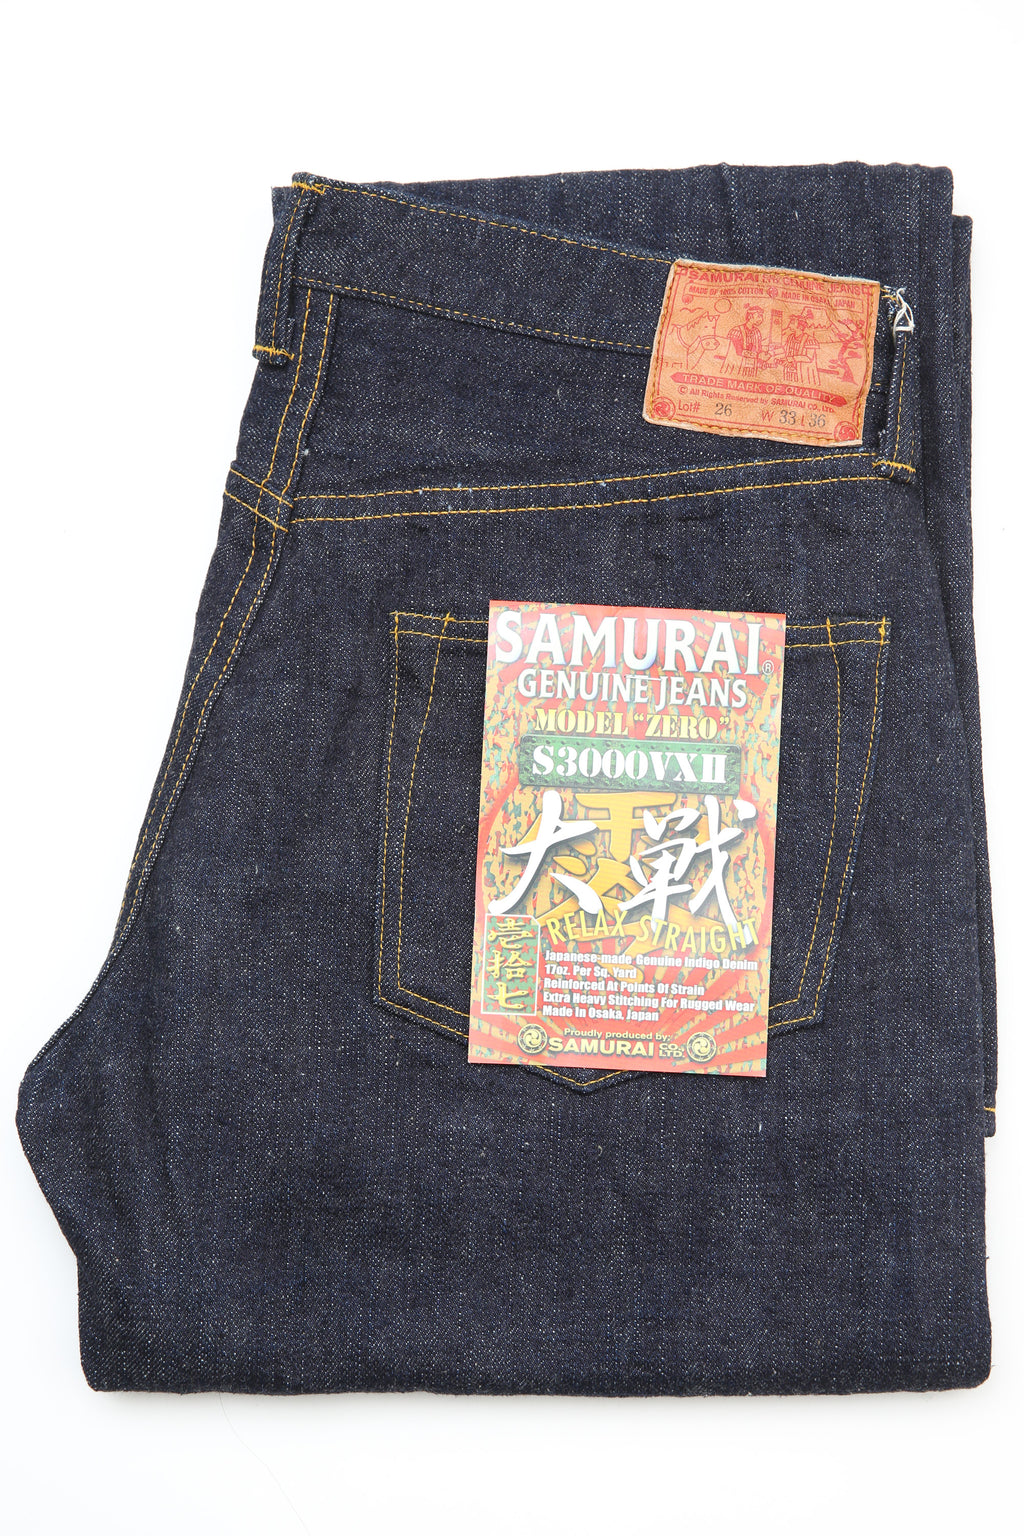 Samurai Jeans S3000VXII 17OZ 零(ZERO) WORLD WAR MODEL WIDE STRAIGHT